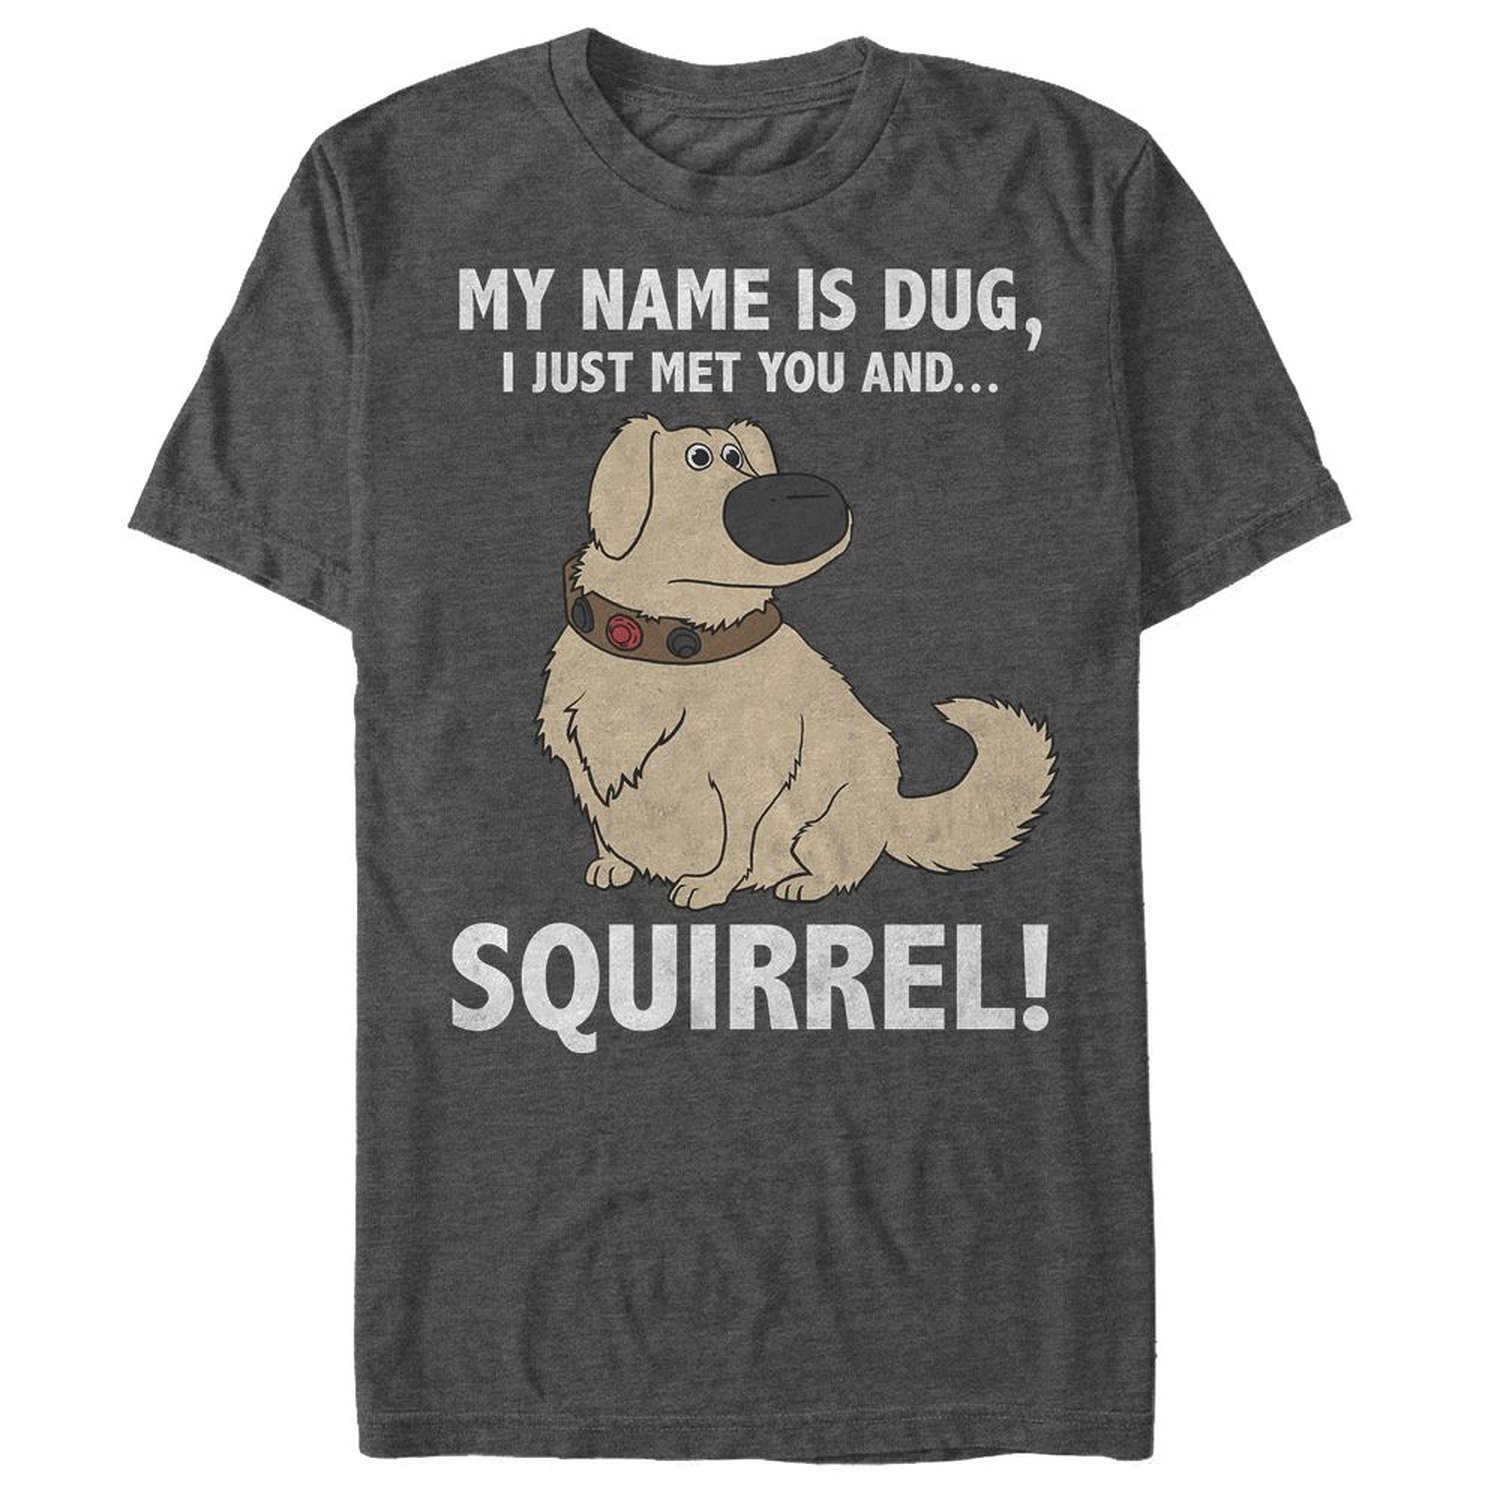 Dug the Dog T-Shirt